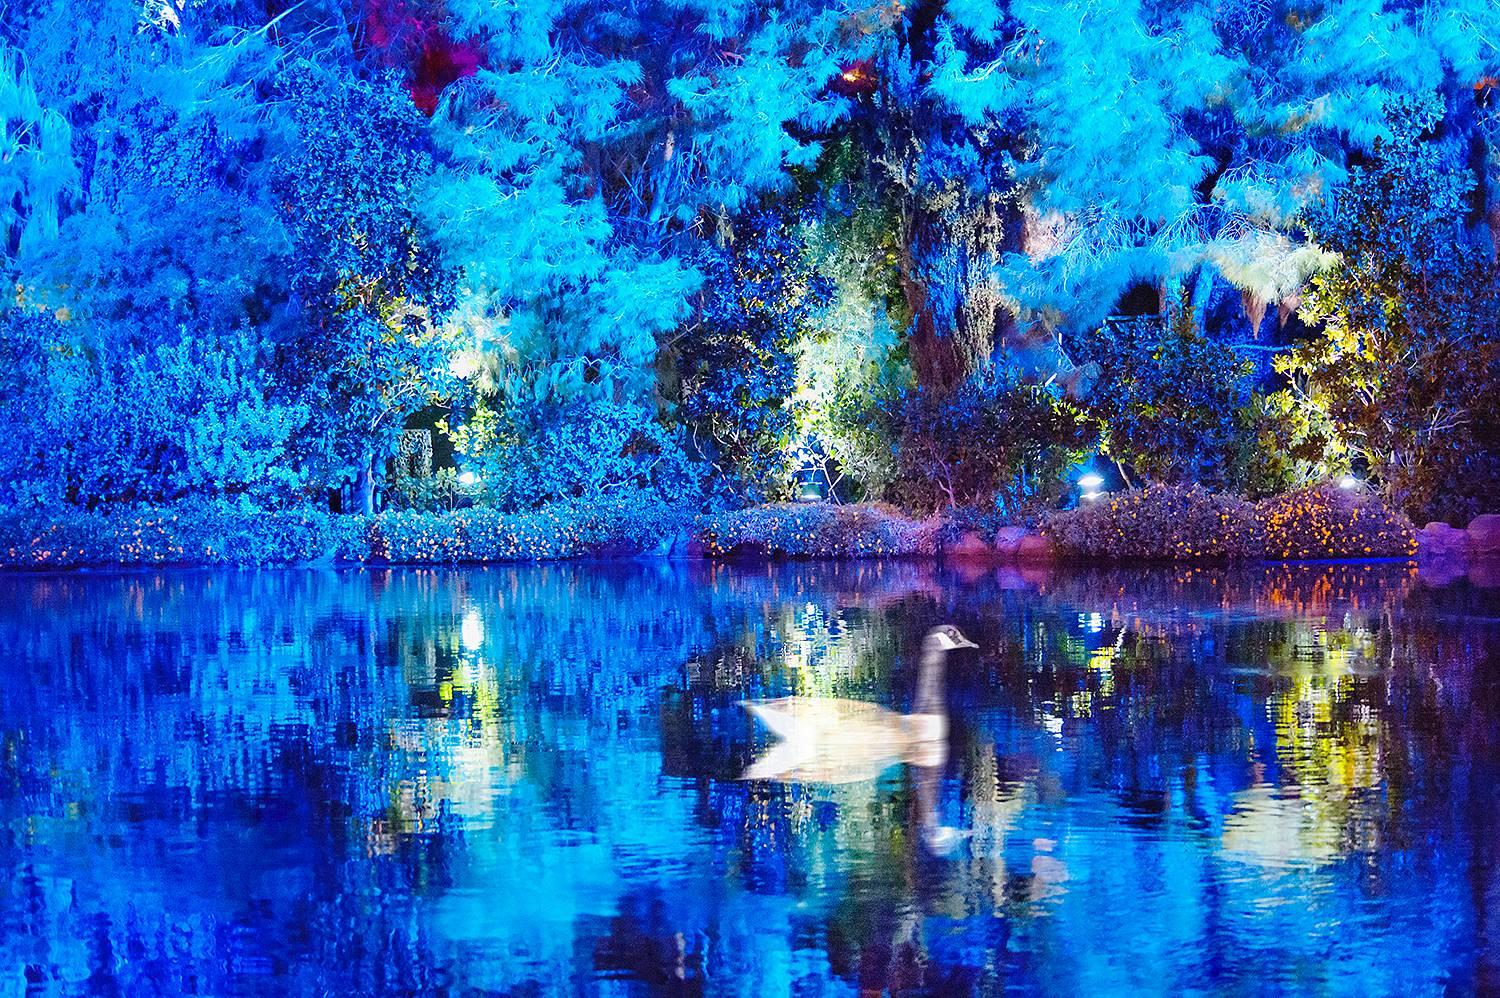 Mitchell Funk Landscape Photograph - Blue Duck Fantasy - Fairy Tale World